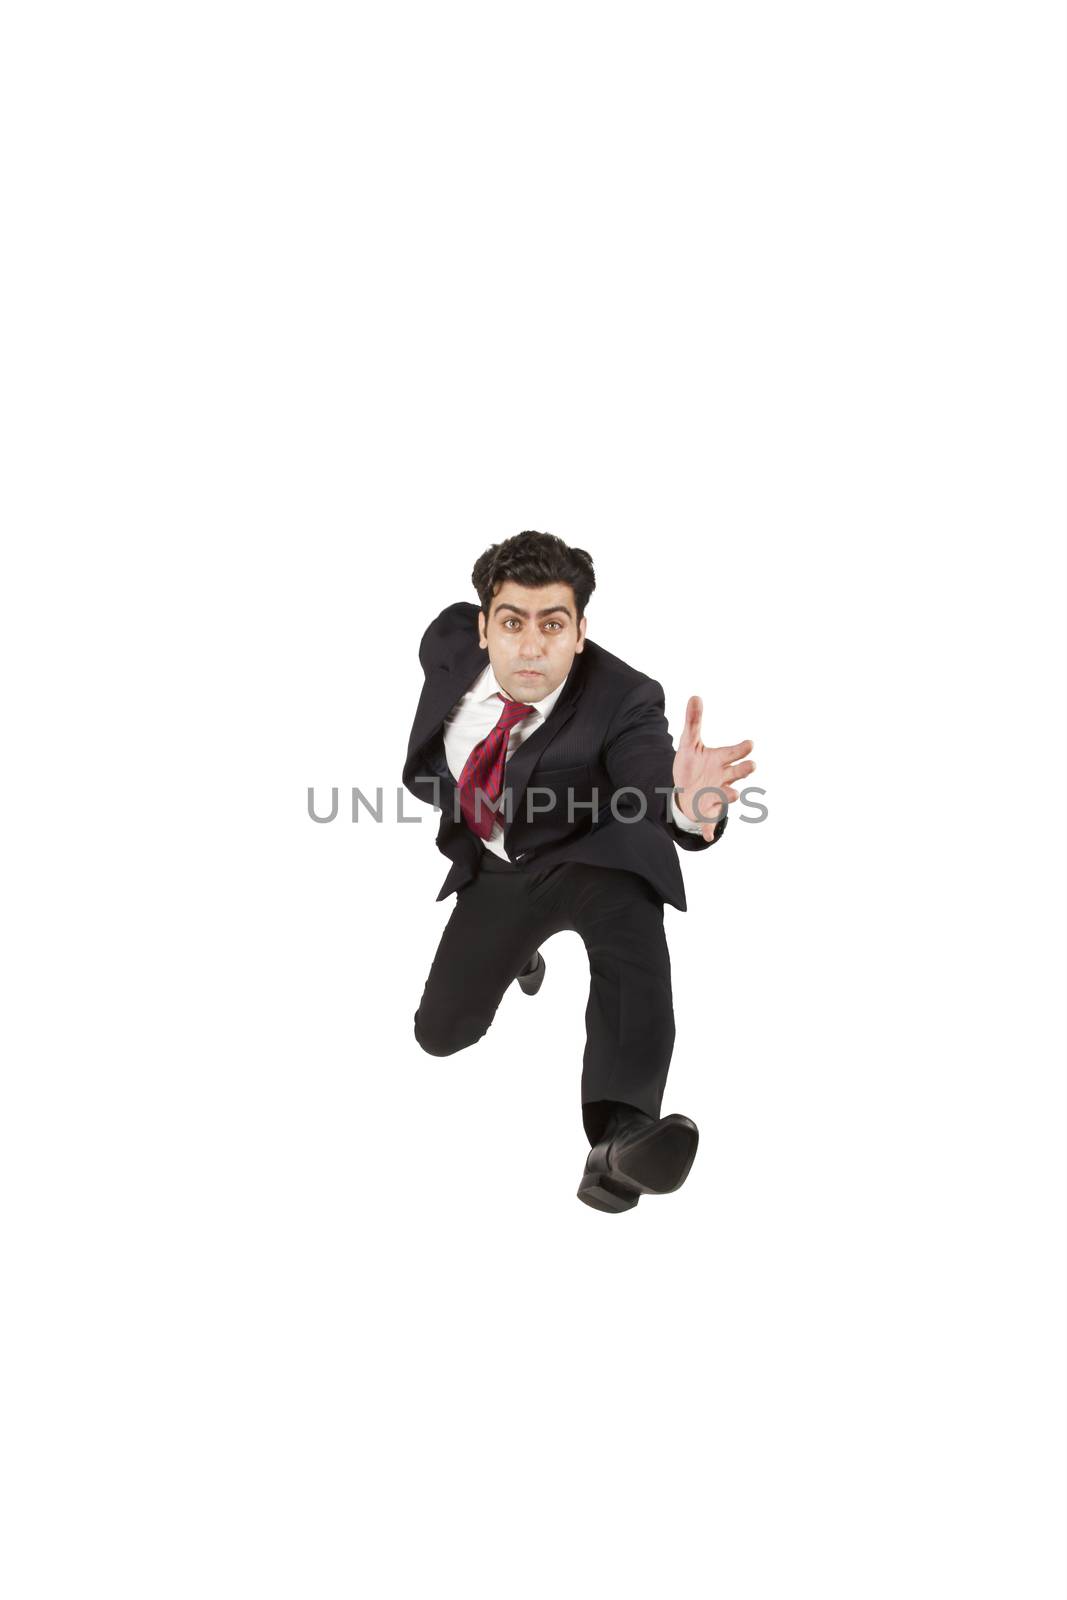 Business man jumping and running forward by haiderazim